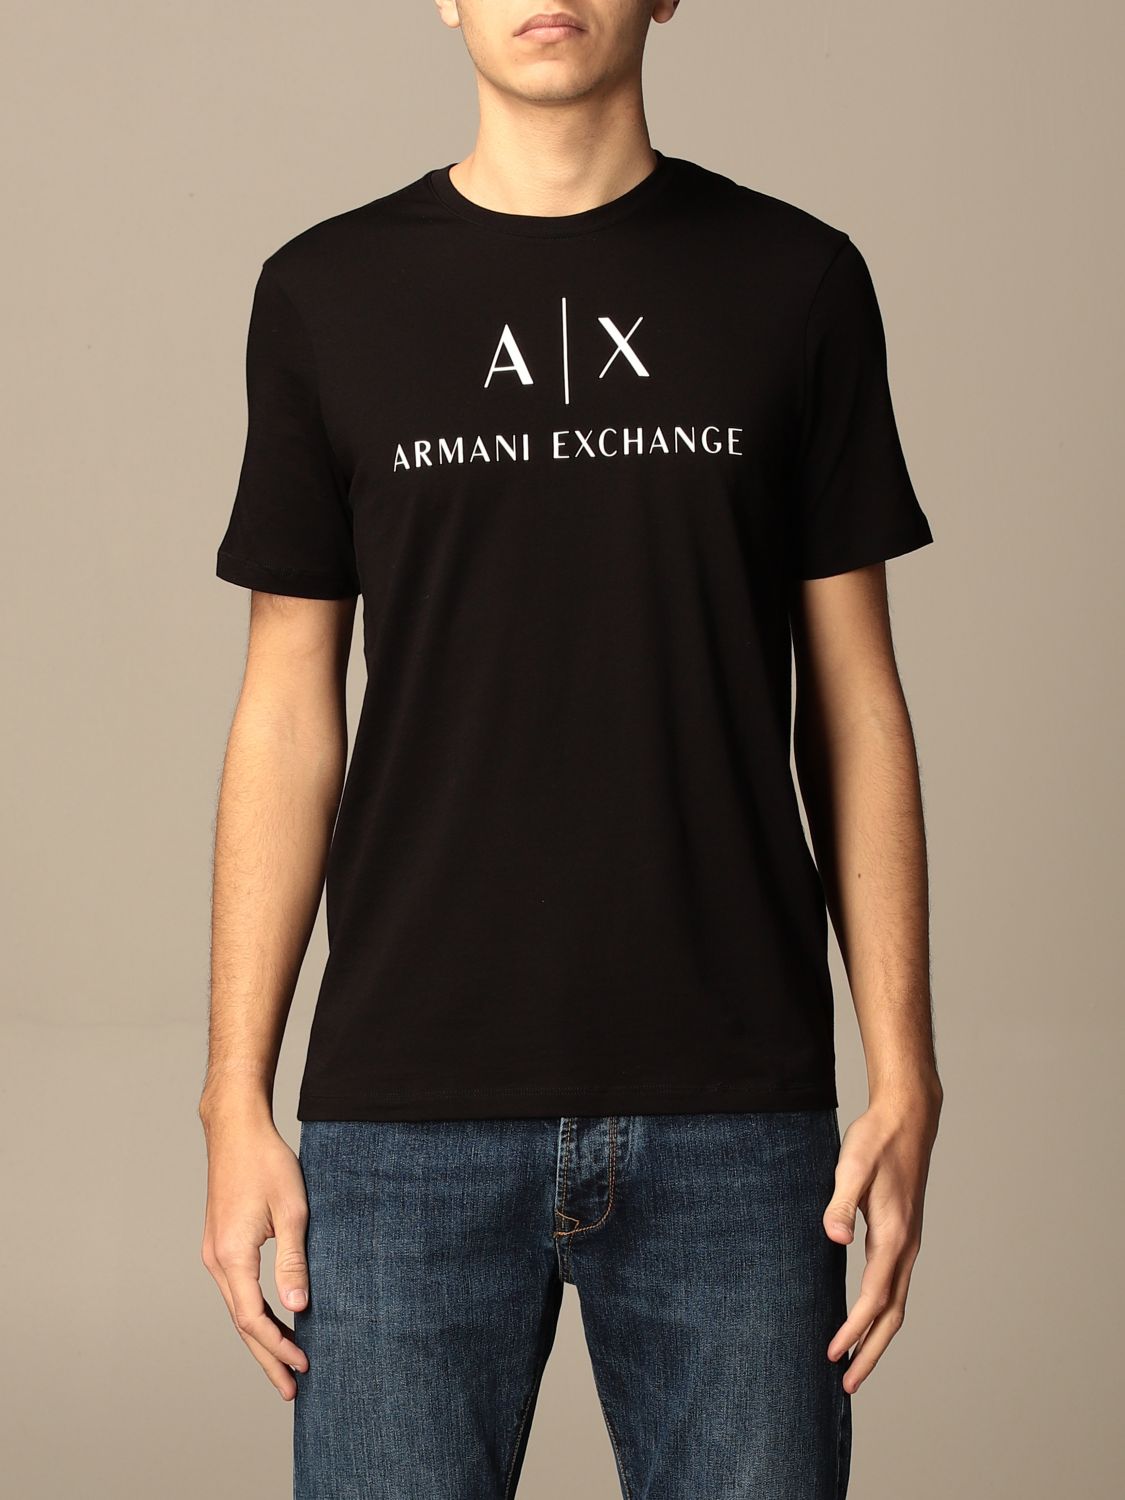 ARMANI EXCHANGE: t-shirt for men - Black | Armani Exchange t-shirt ...